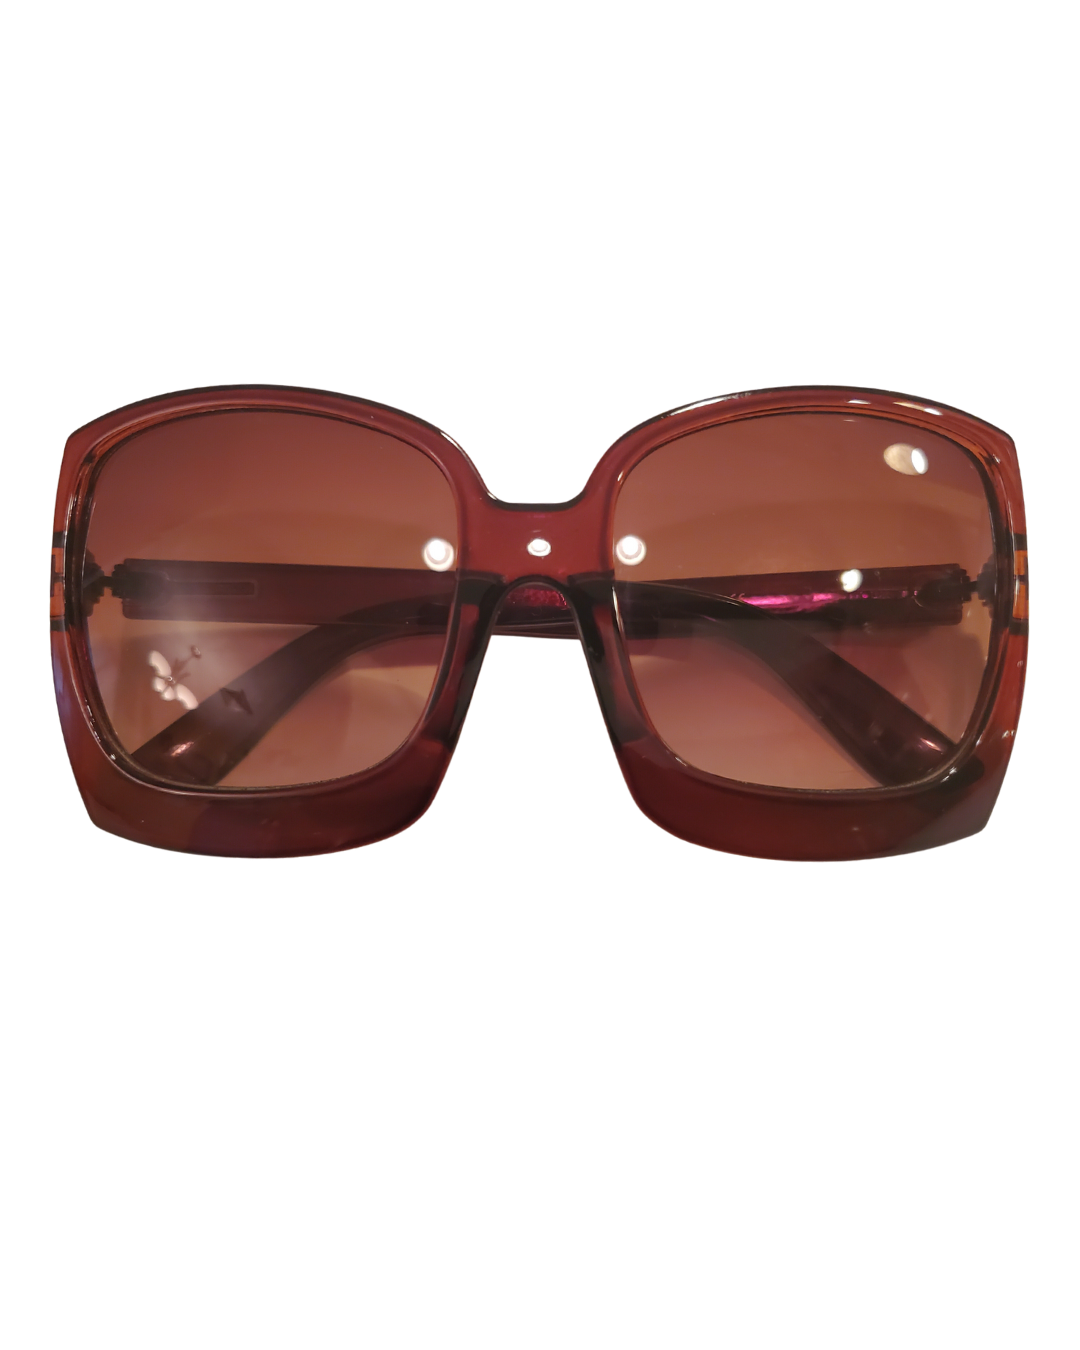 image of brown sunglasses